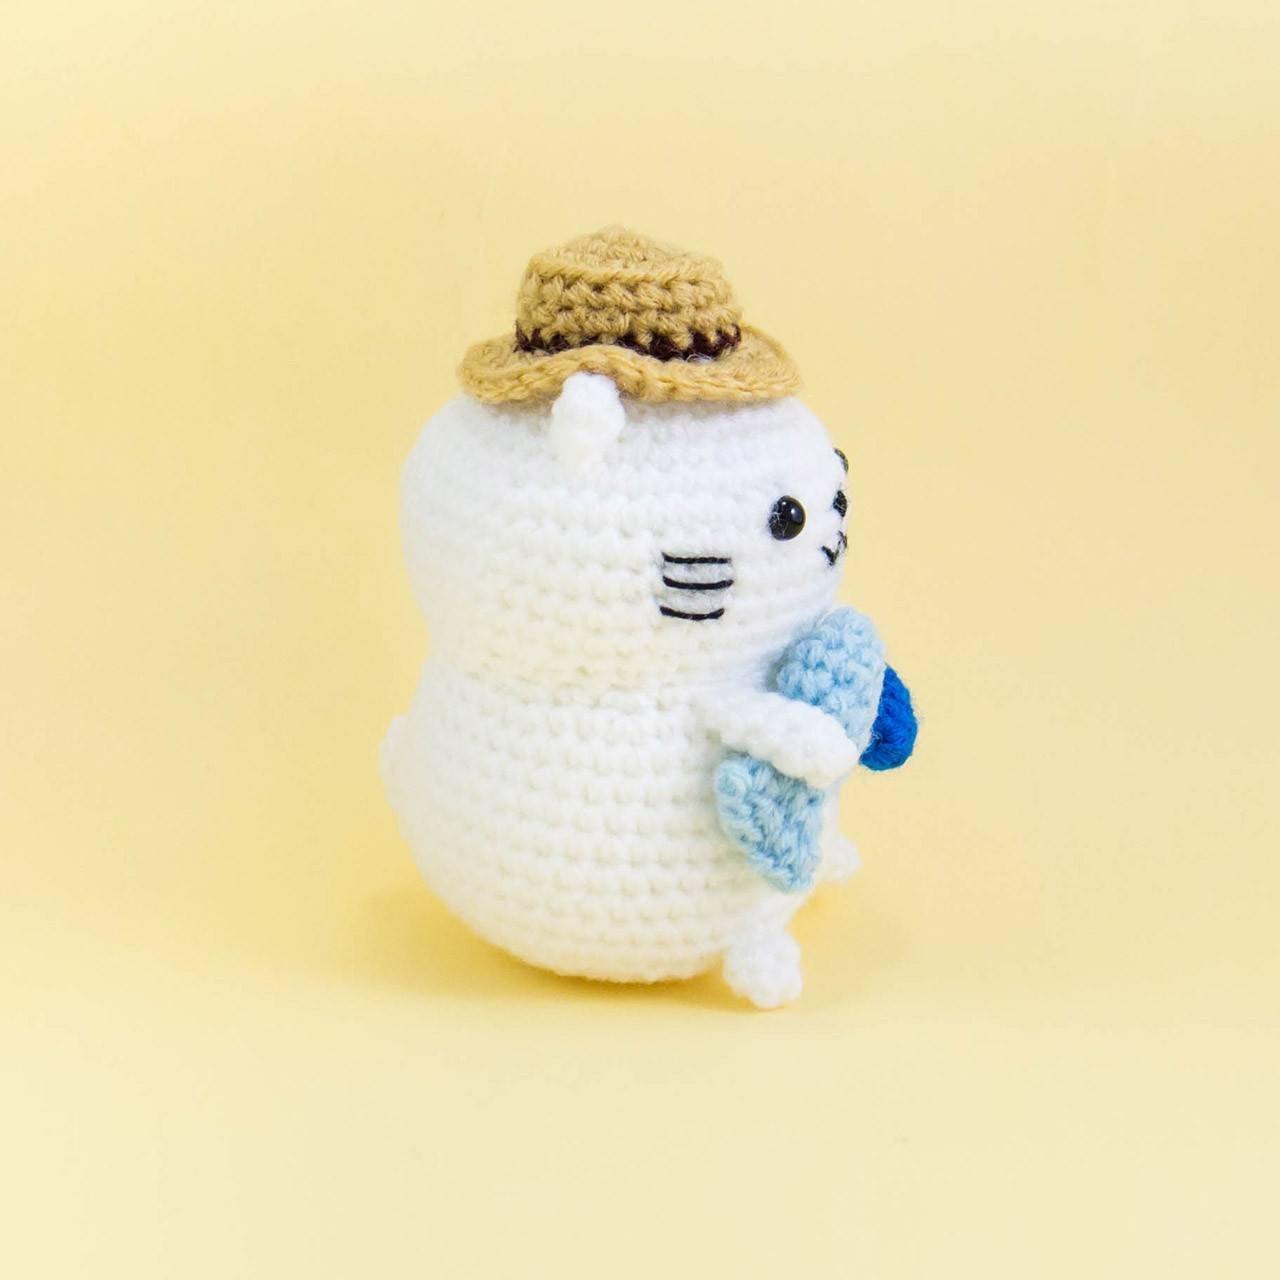 Crochet Cat Toy